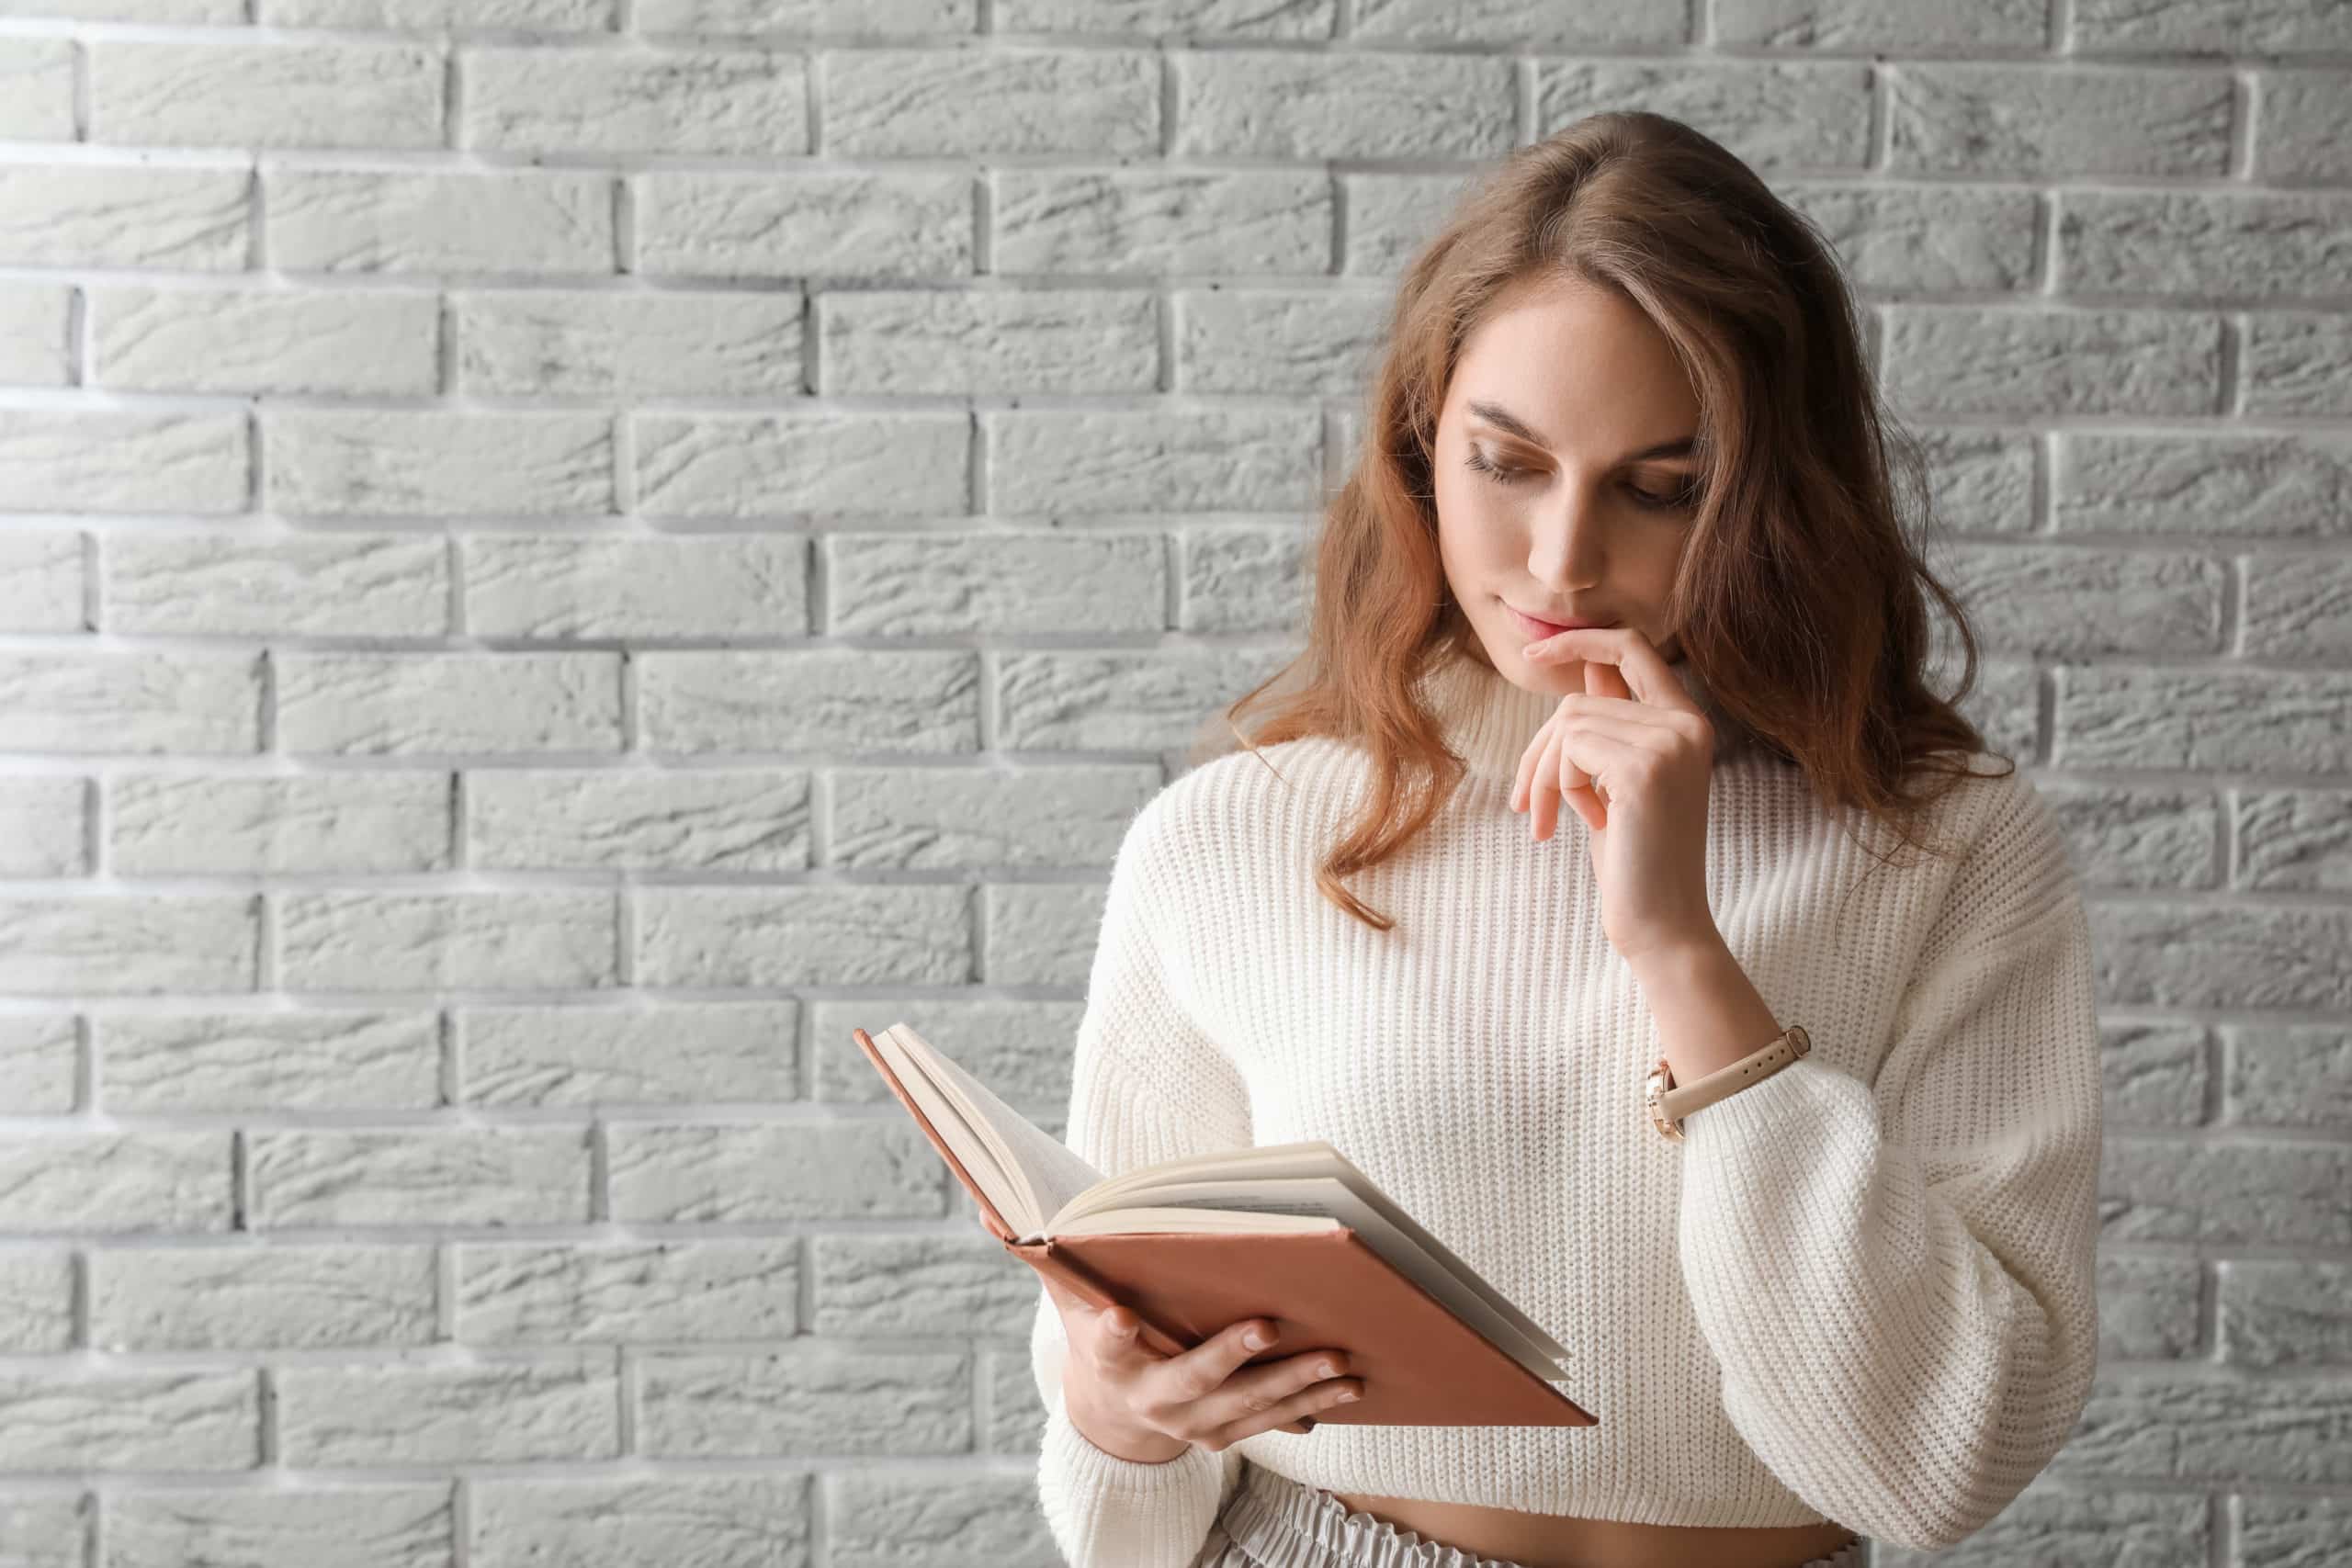 Pensive woman reading book near grey brick wall.